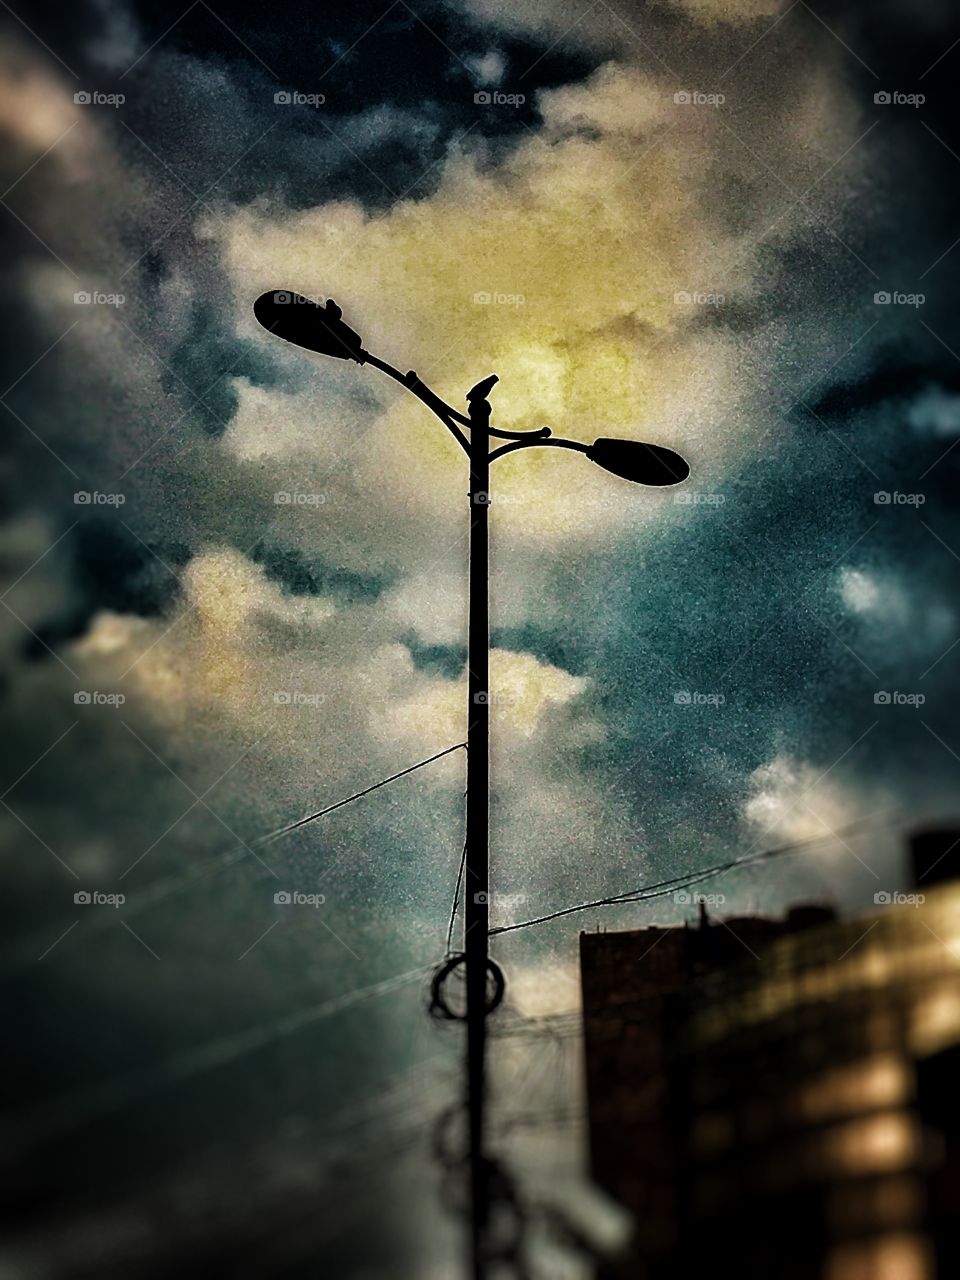 A bird sitting on streetlight!!